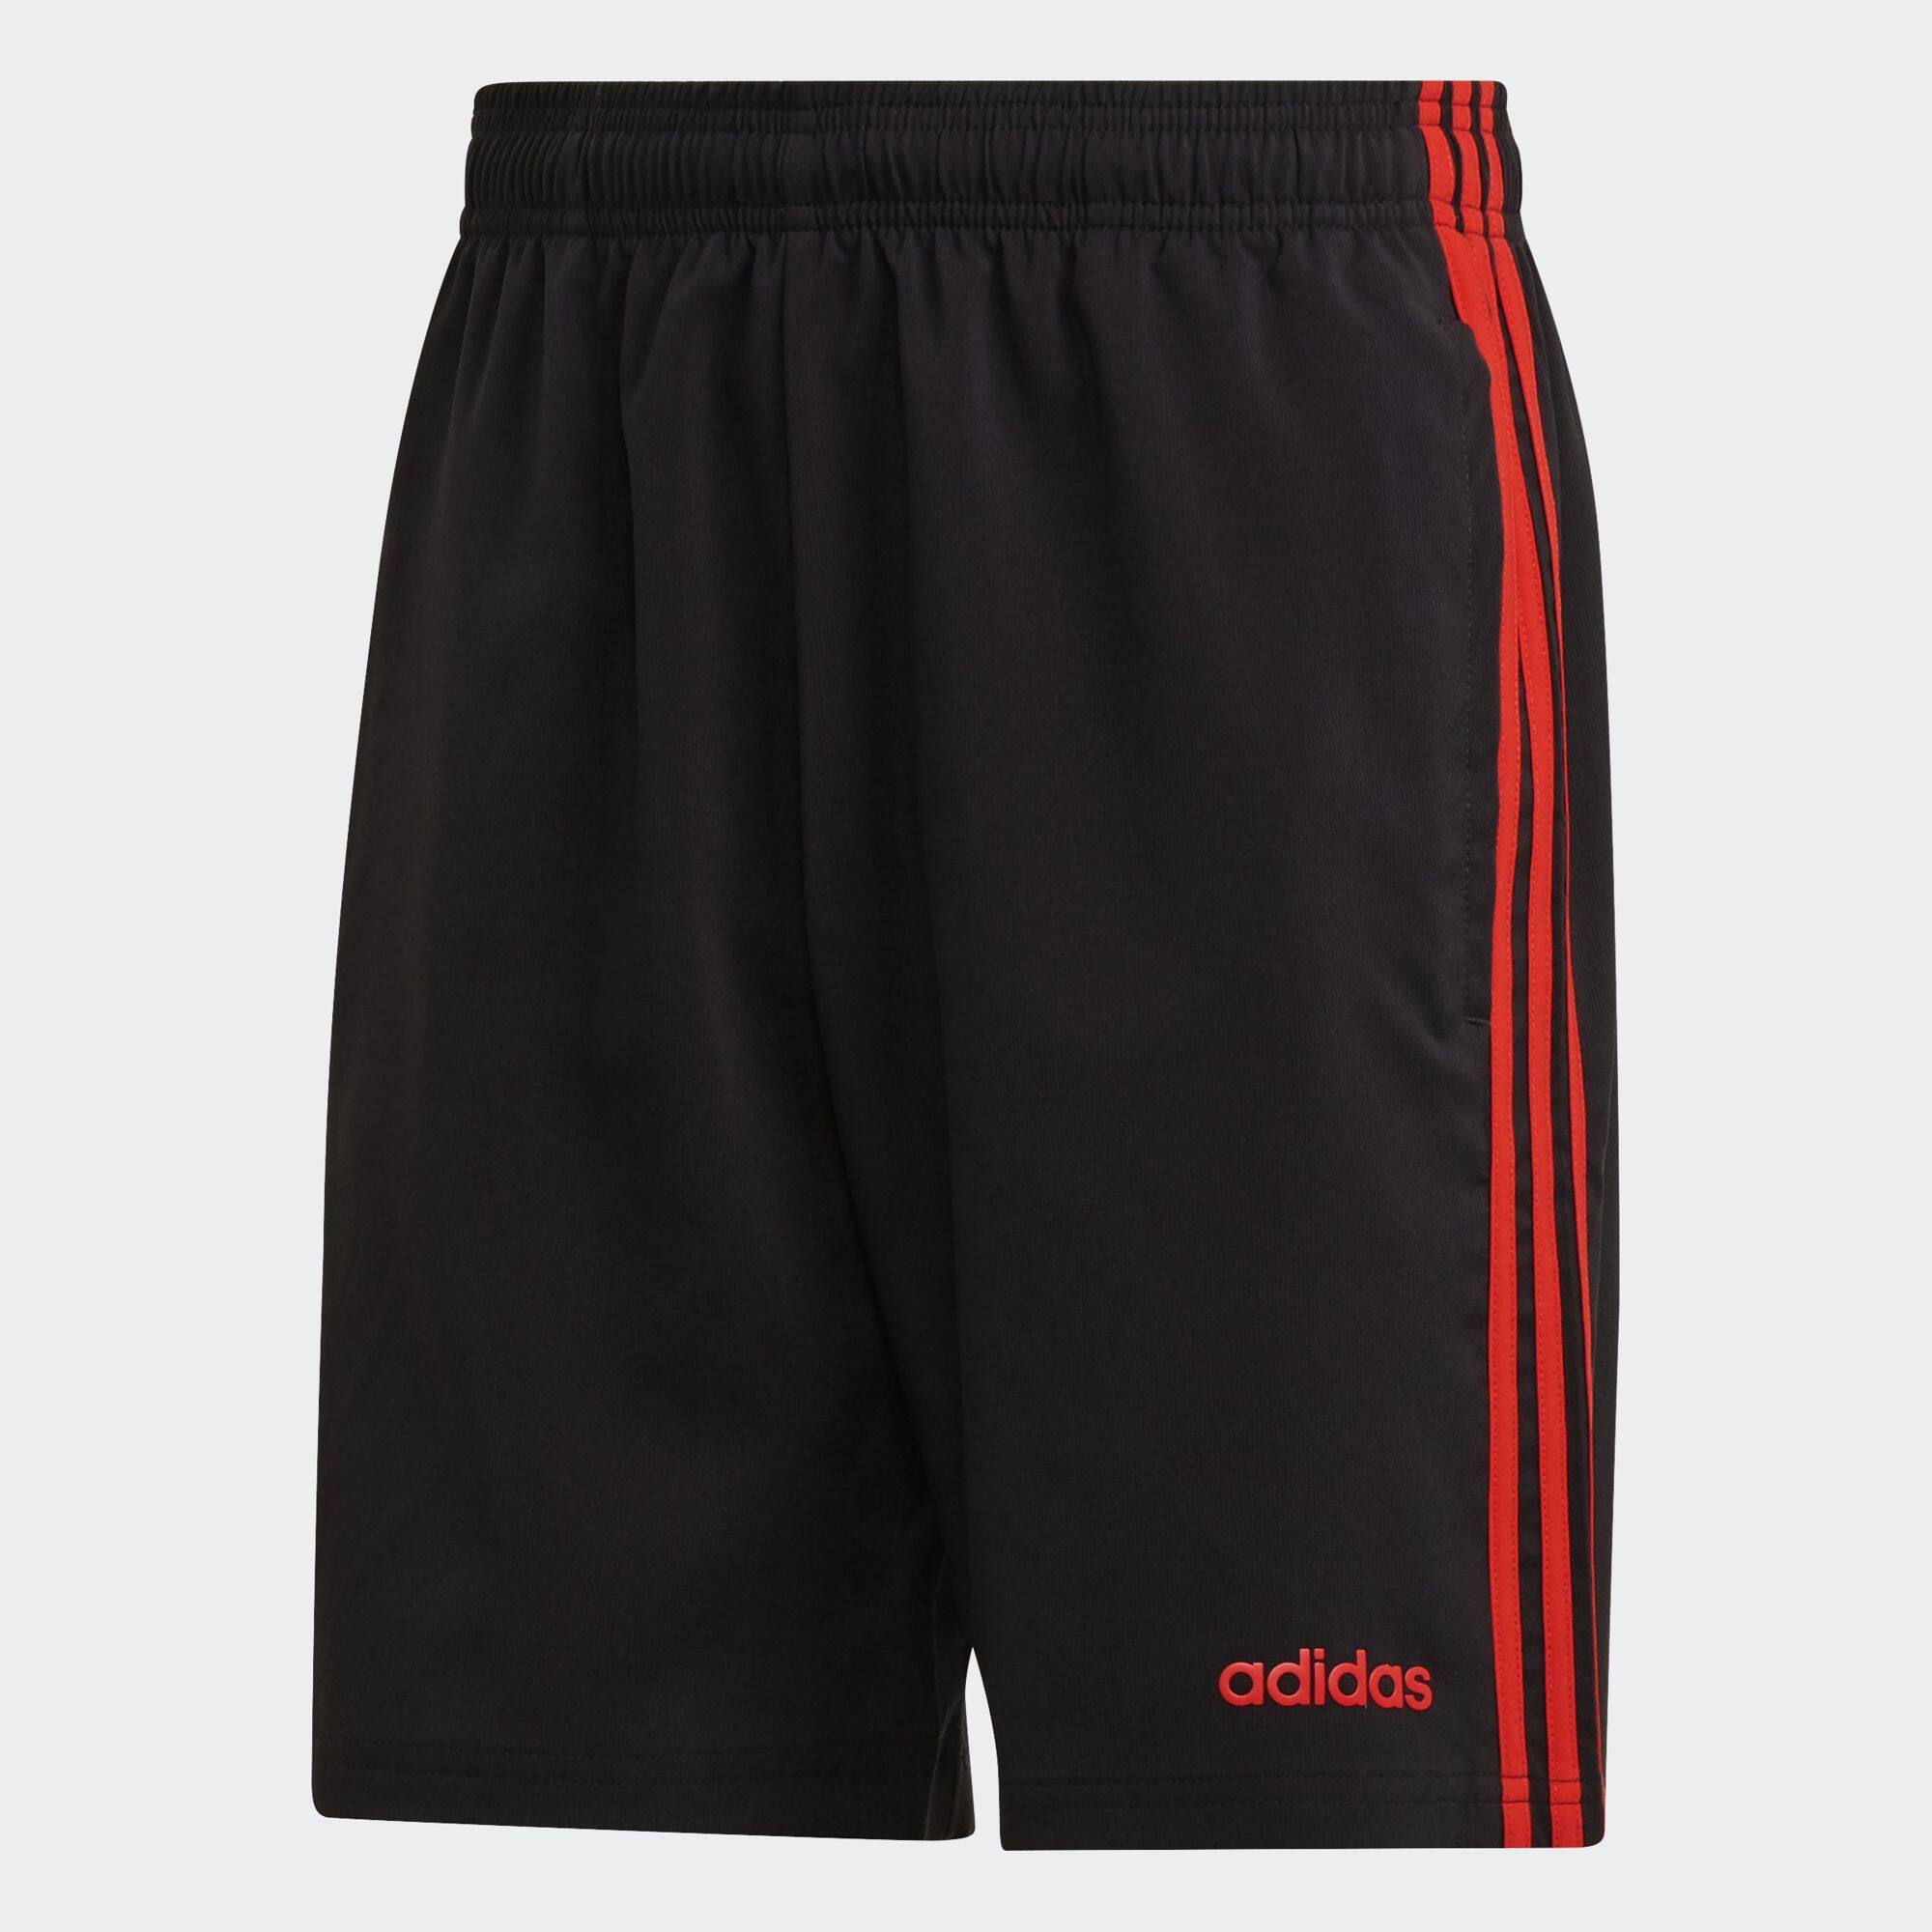 adidas NOT SPORTS SPECIFIC Essentials 3-Stripes Chelsea Shorts 7 Inch ผู้ชาย สีดำ GD5203